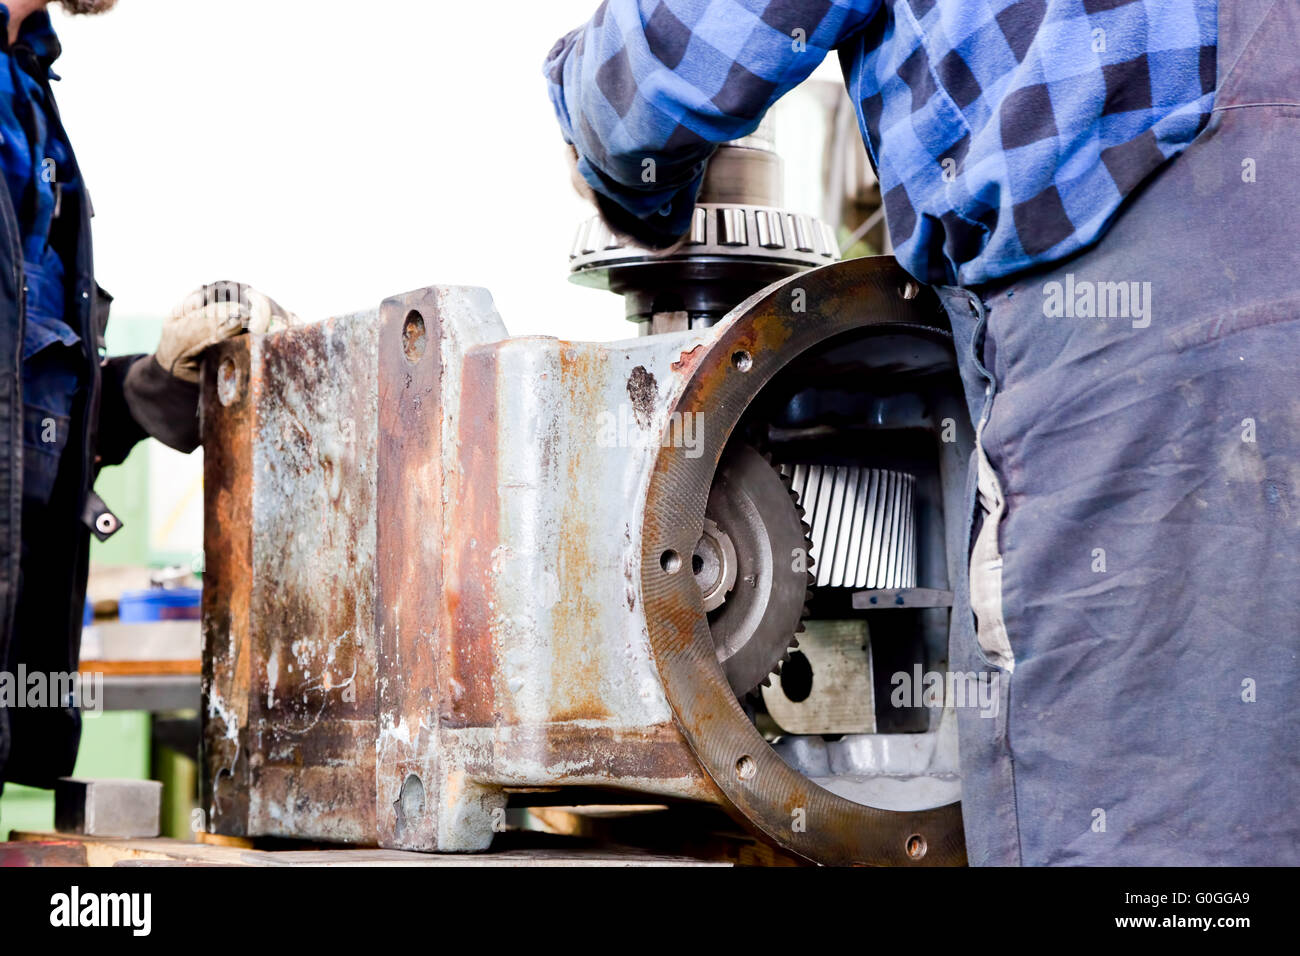 Workers repair, work on old gear element in workshop. Industry Stock Photo